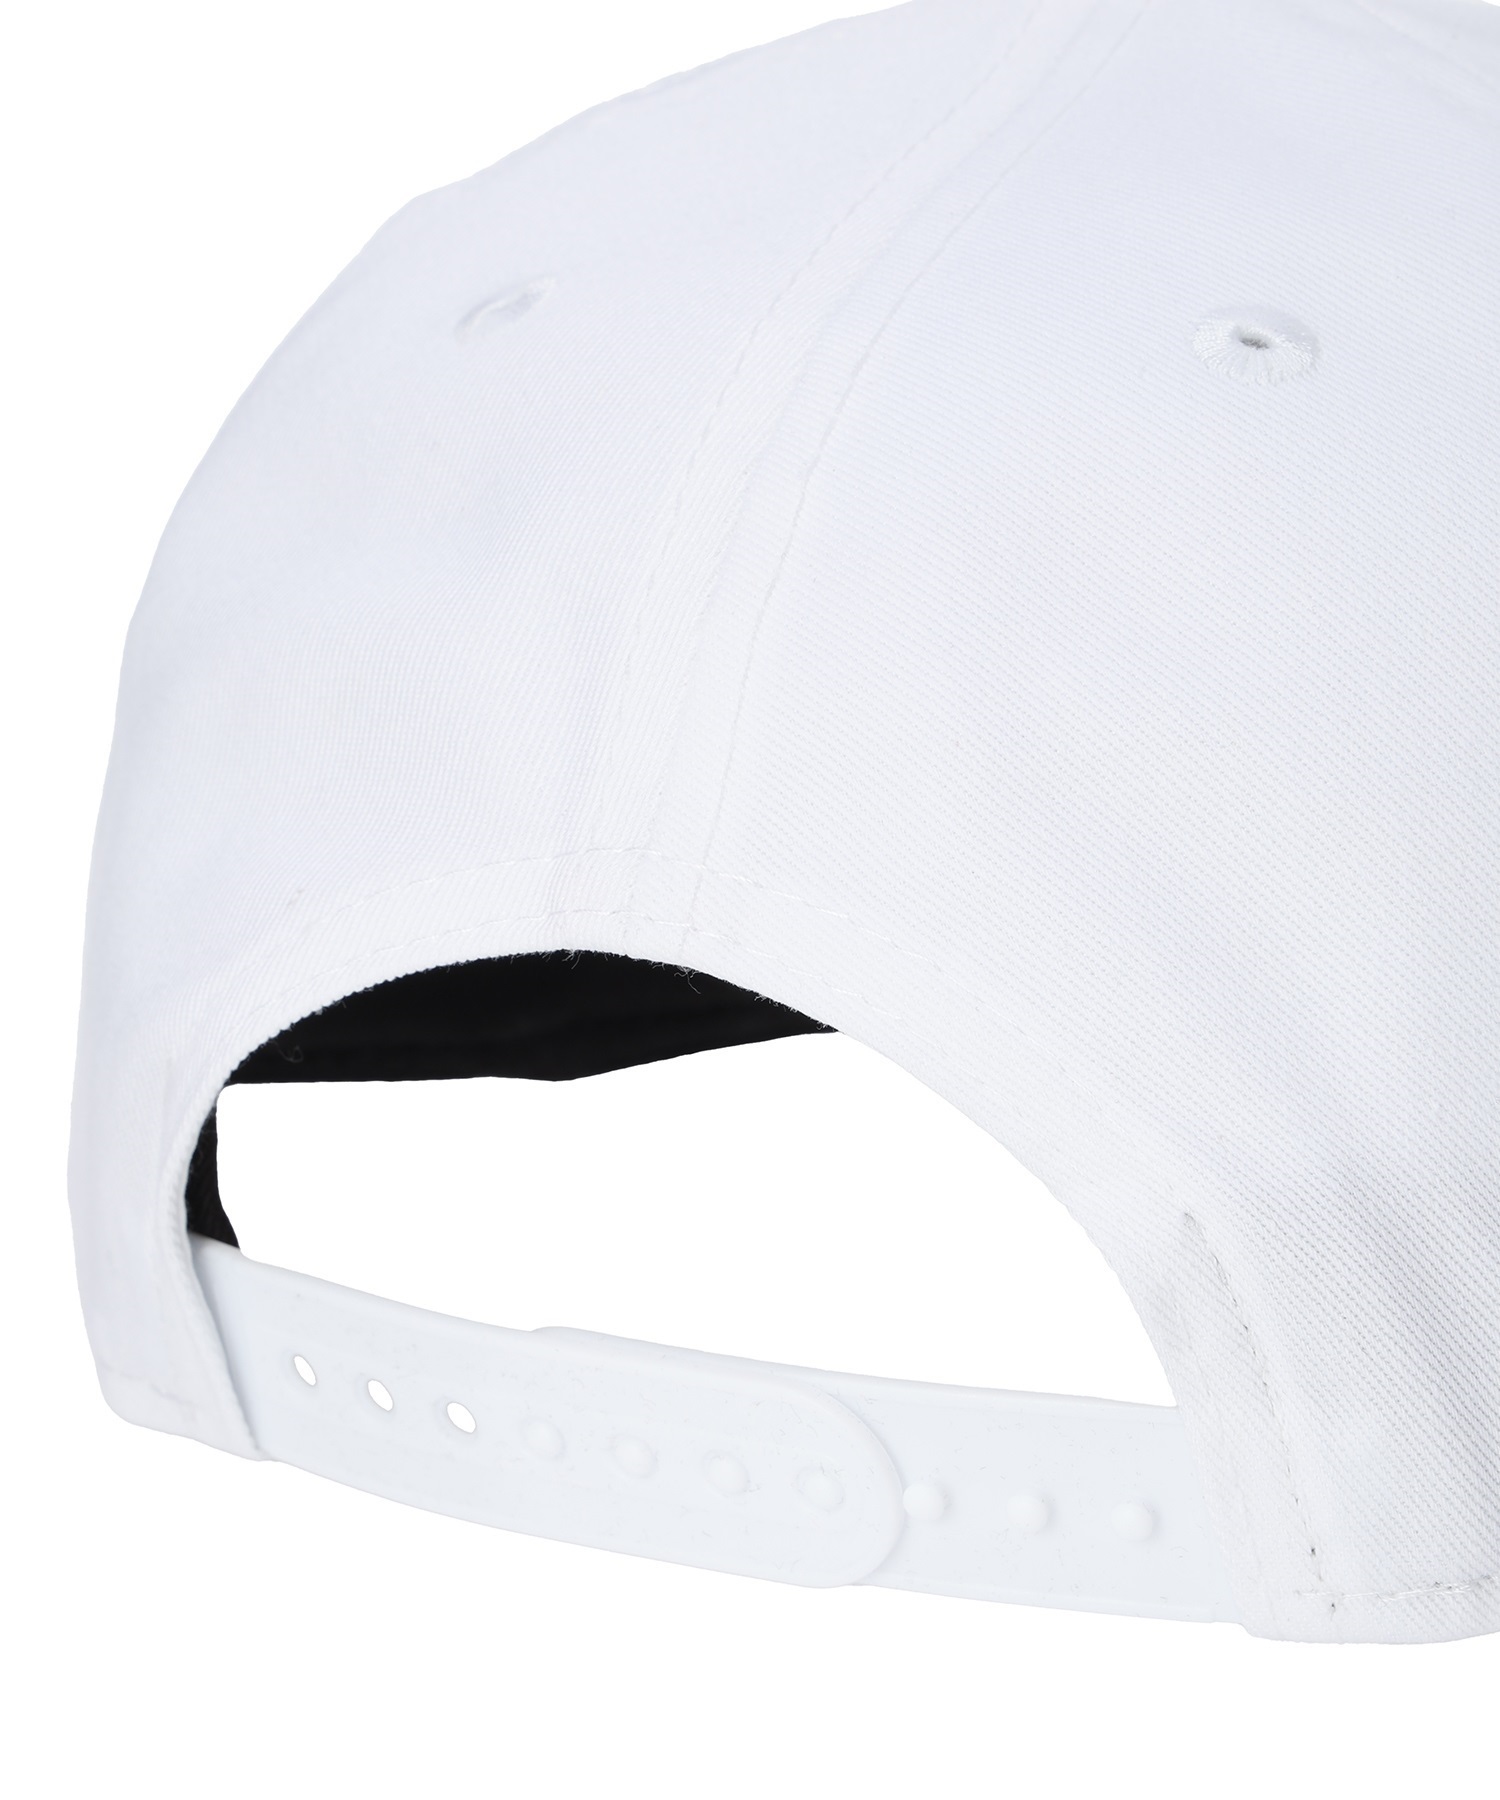 NEW ERA ニューエラ × INDEPENDENT インディペンデント 9FIFTY Original Fit キャップ 帽子 14299642 14299643 ムラサキスポーツ限定(BLK-ONESIZE)